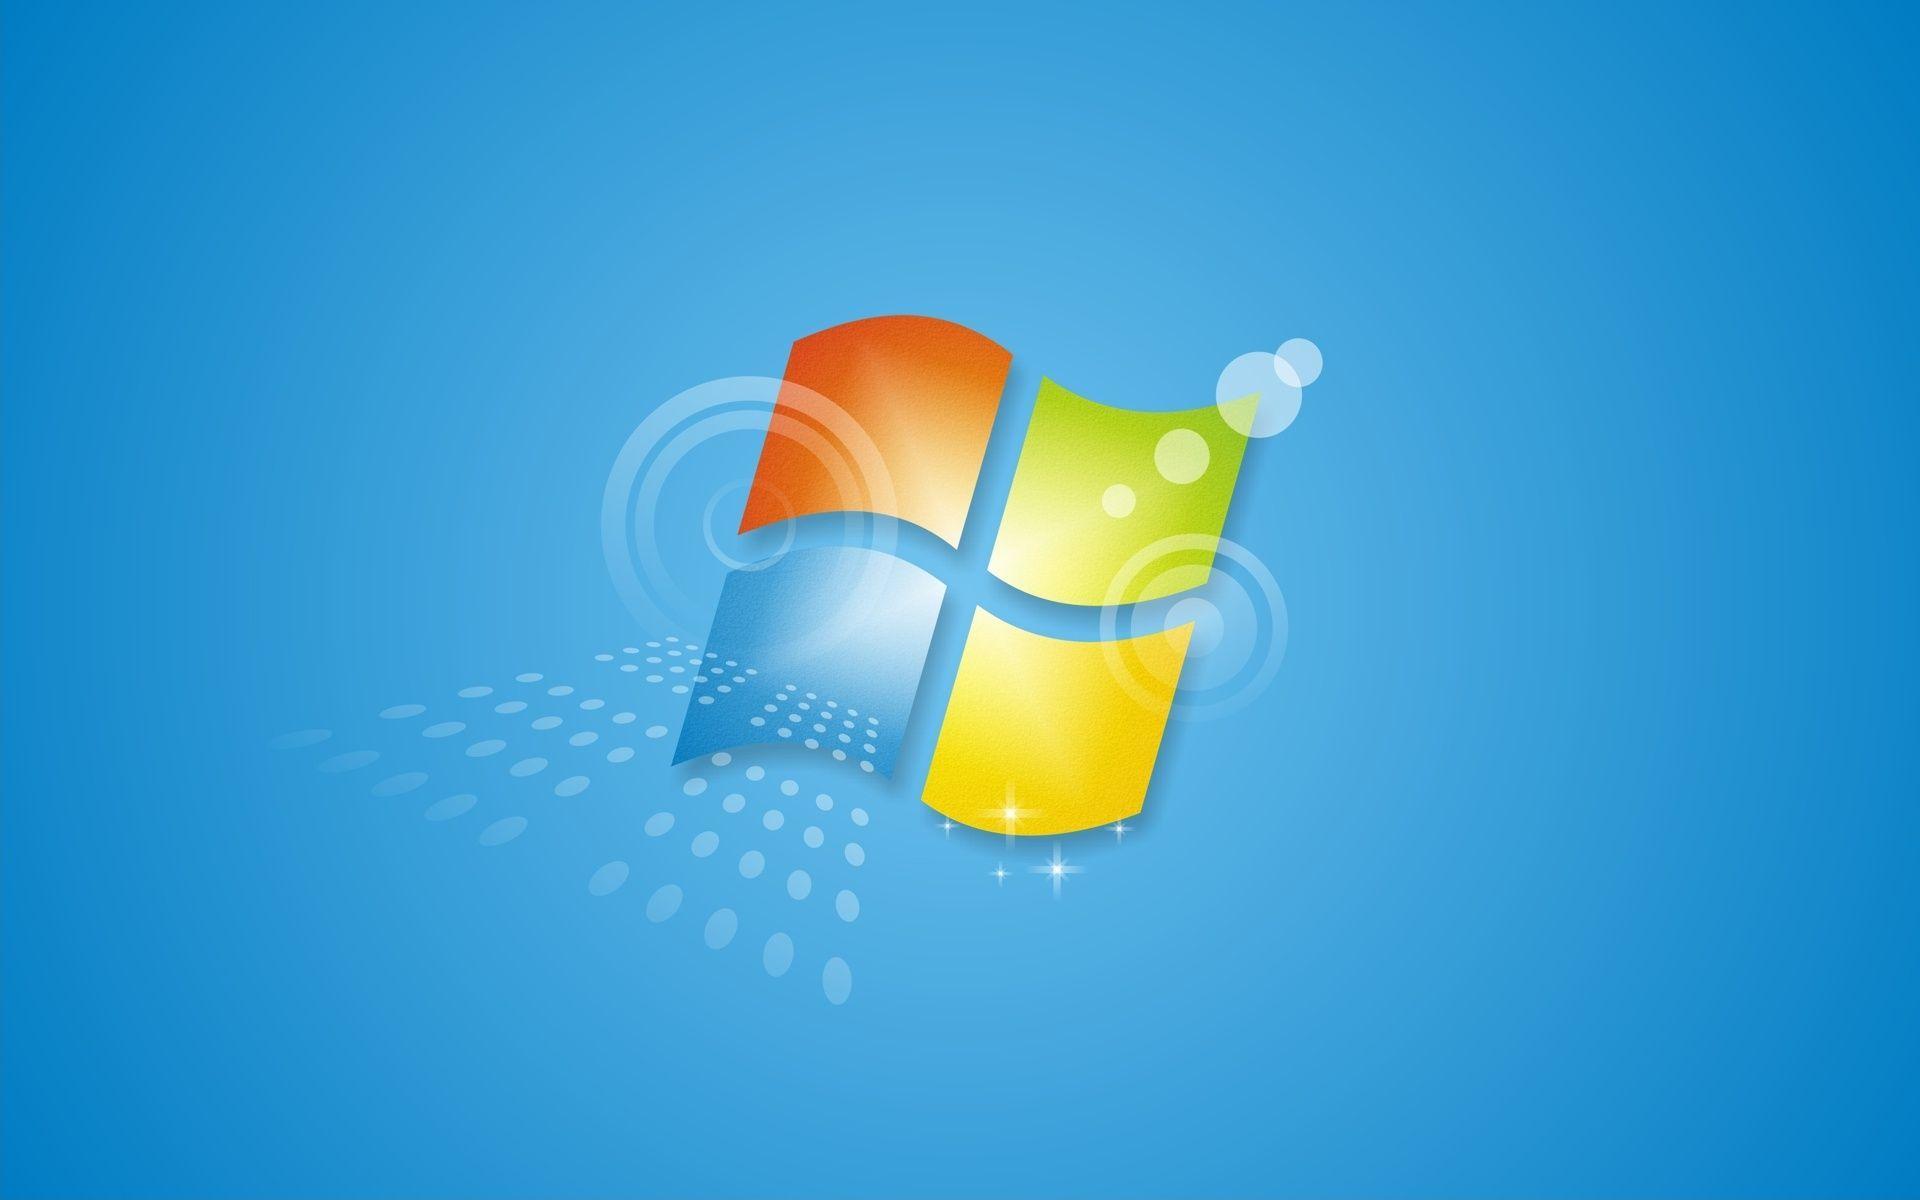 Windows 7 Alternate Blue HD Wallpaper. Download HD Wallpaper